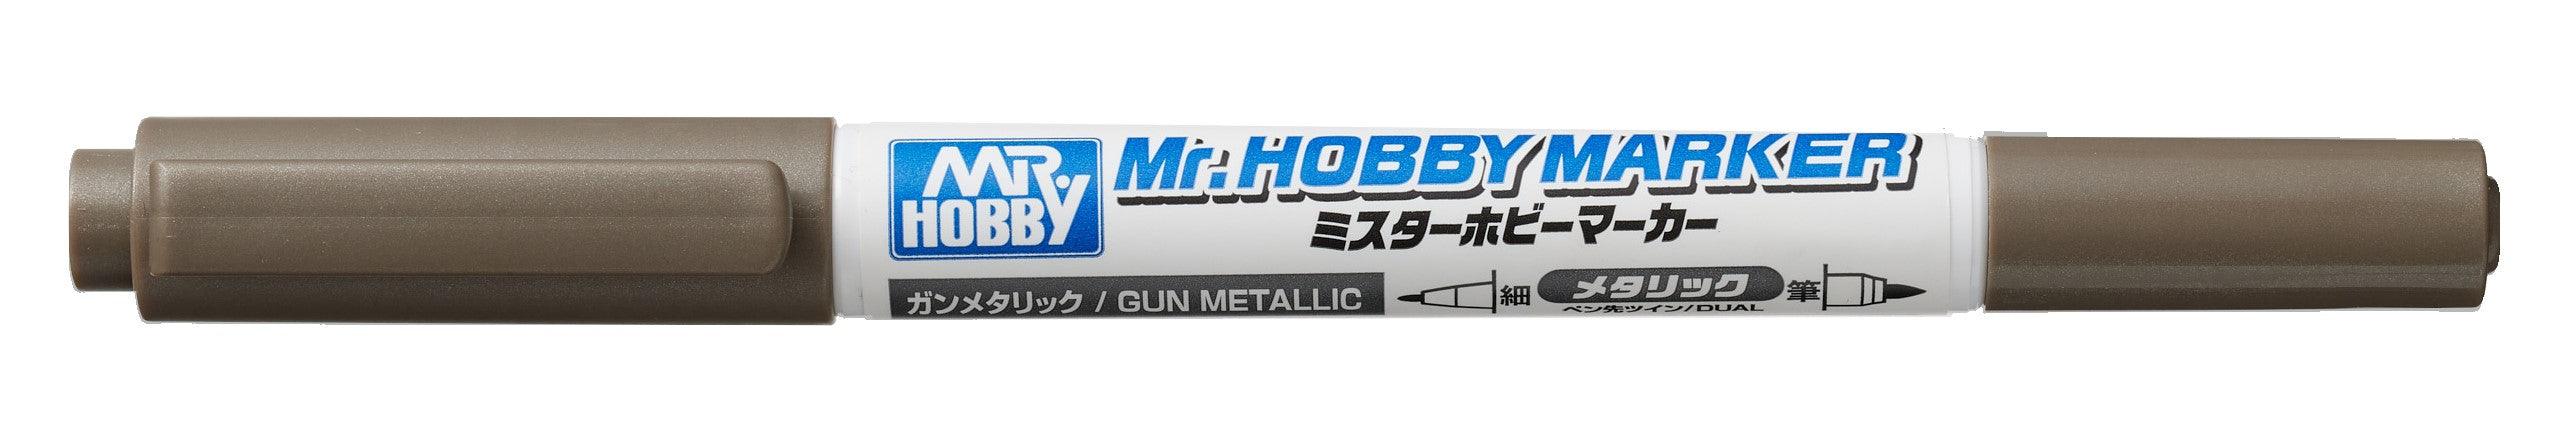 GSI Creos Mr.HOBBY MARKER: CM04 GUN METALLIC - SaQra Mart Hobby